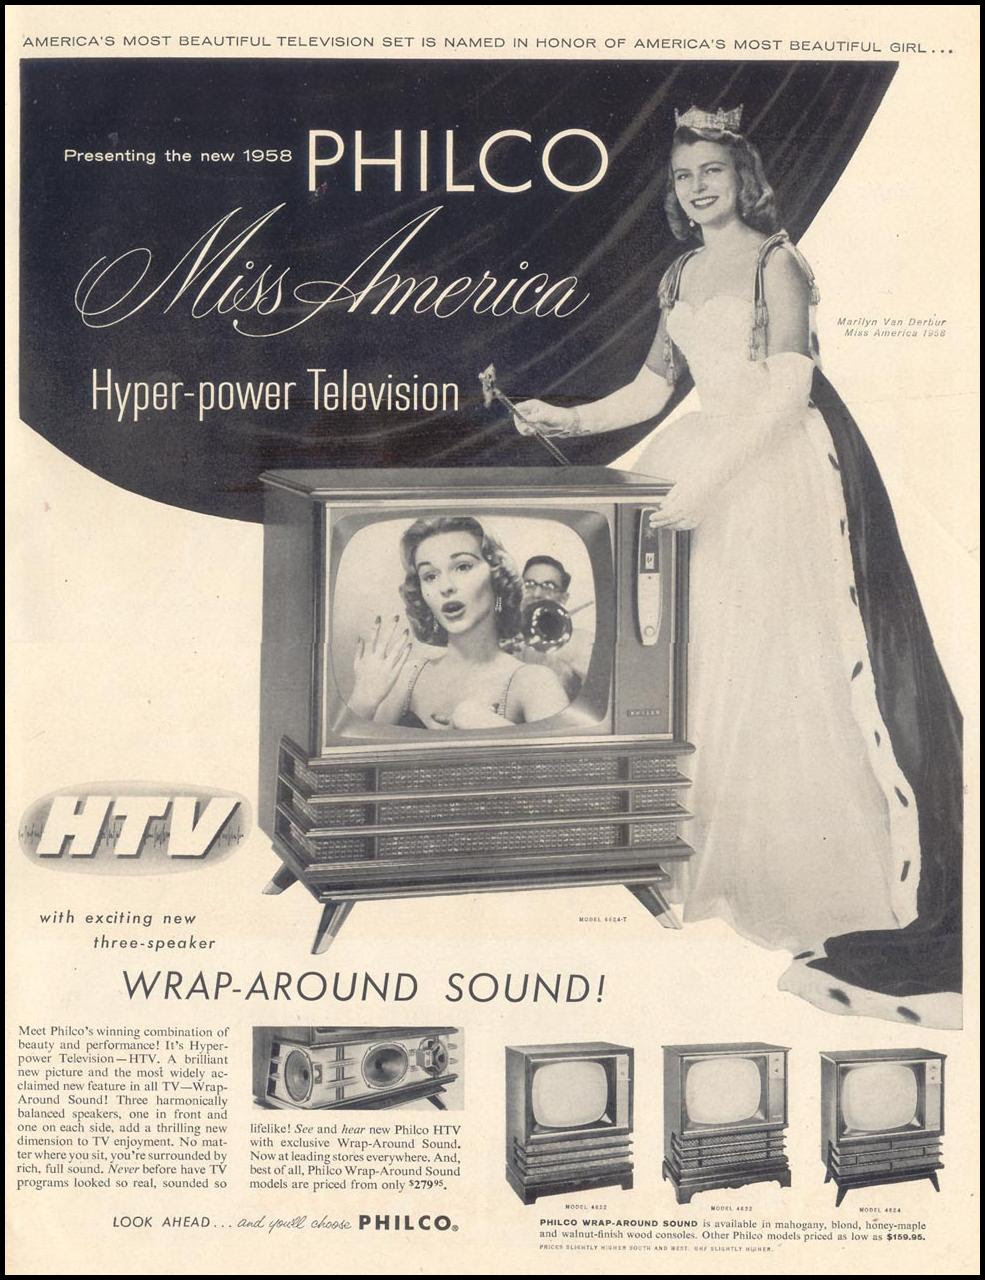 PHILCO MISS AMERICA HYPER-POWER TELEVISION
LIFE
11/11/1957
p. 1